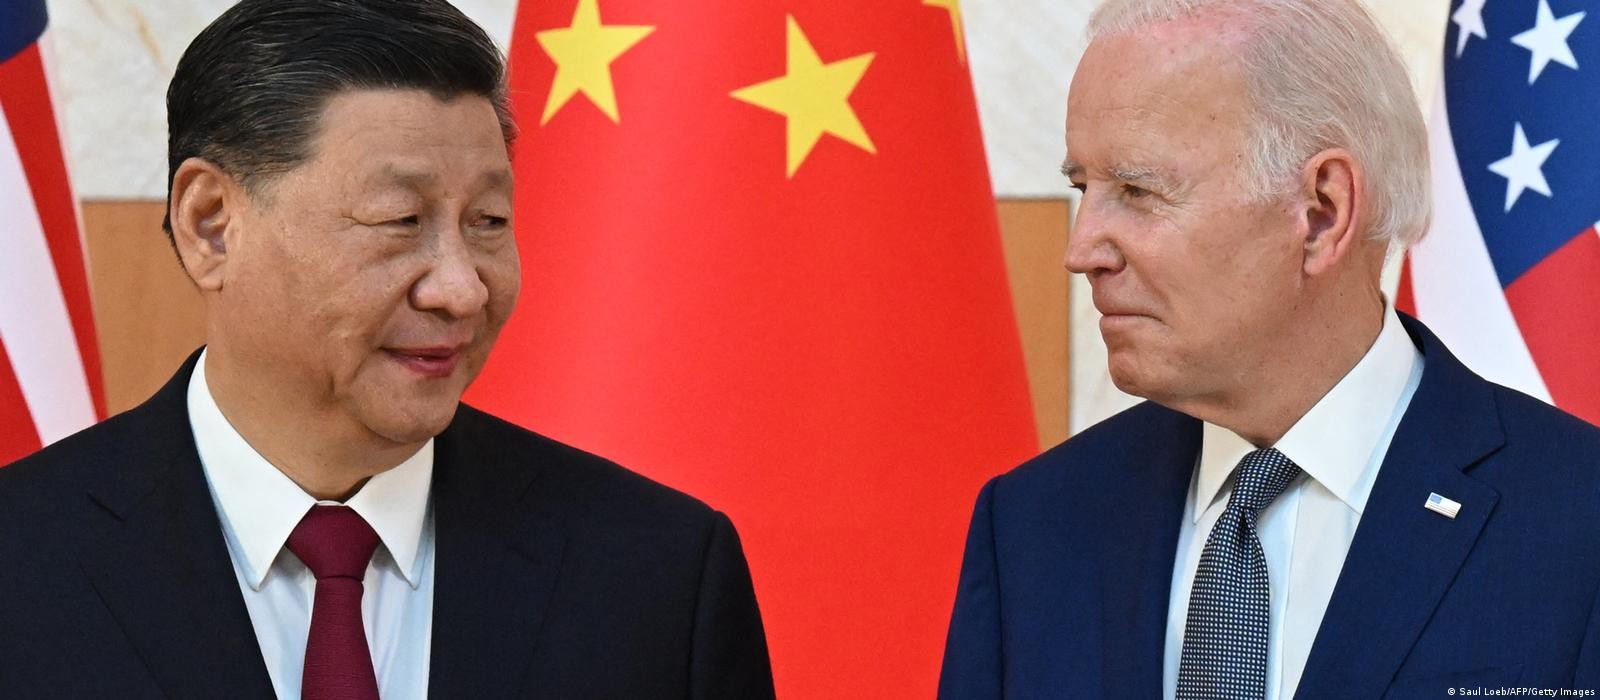 Biden está 'monitorando' protestos na China, diz Casa Branca